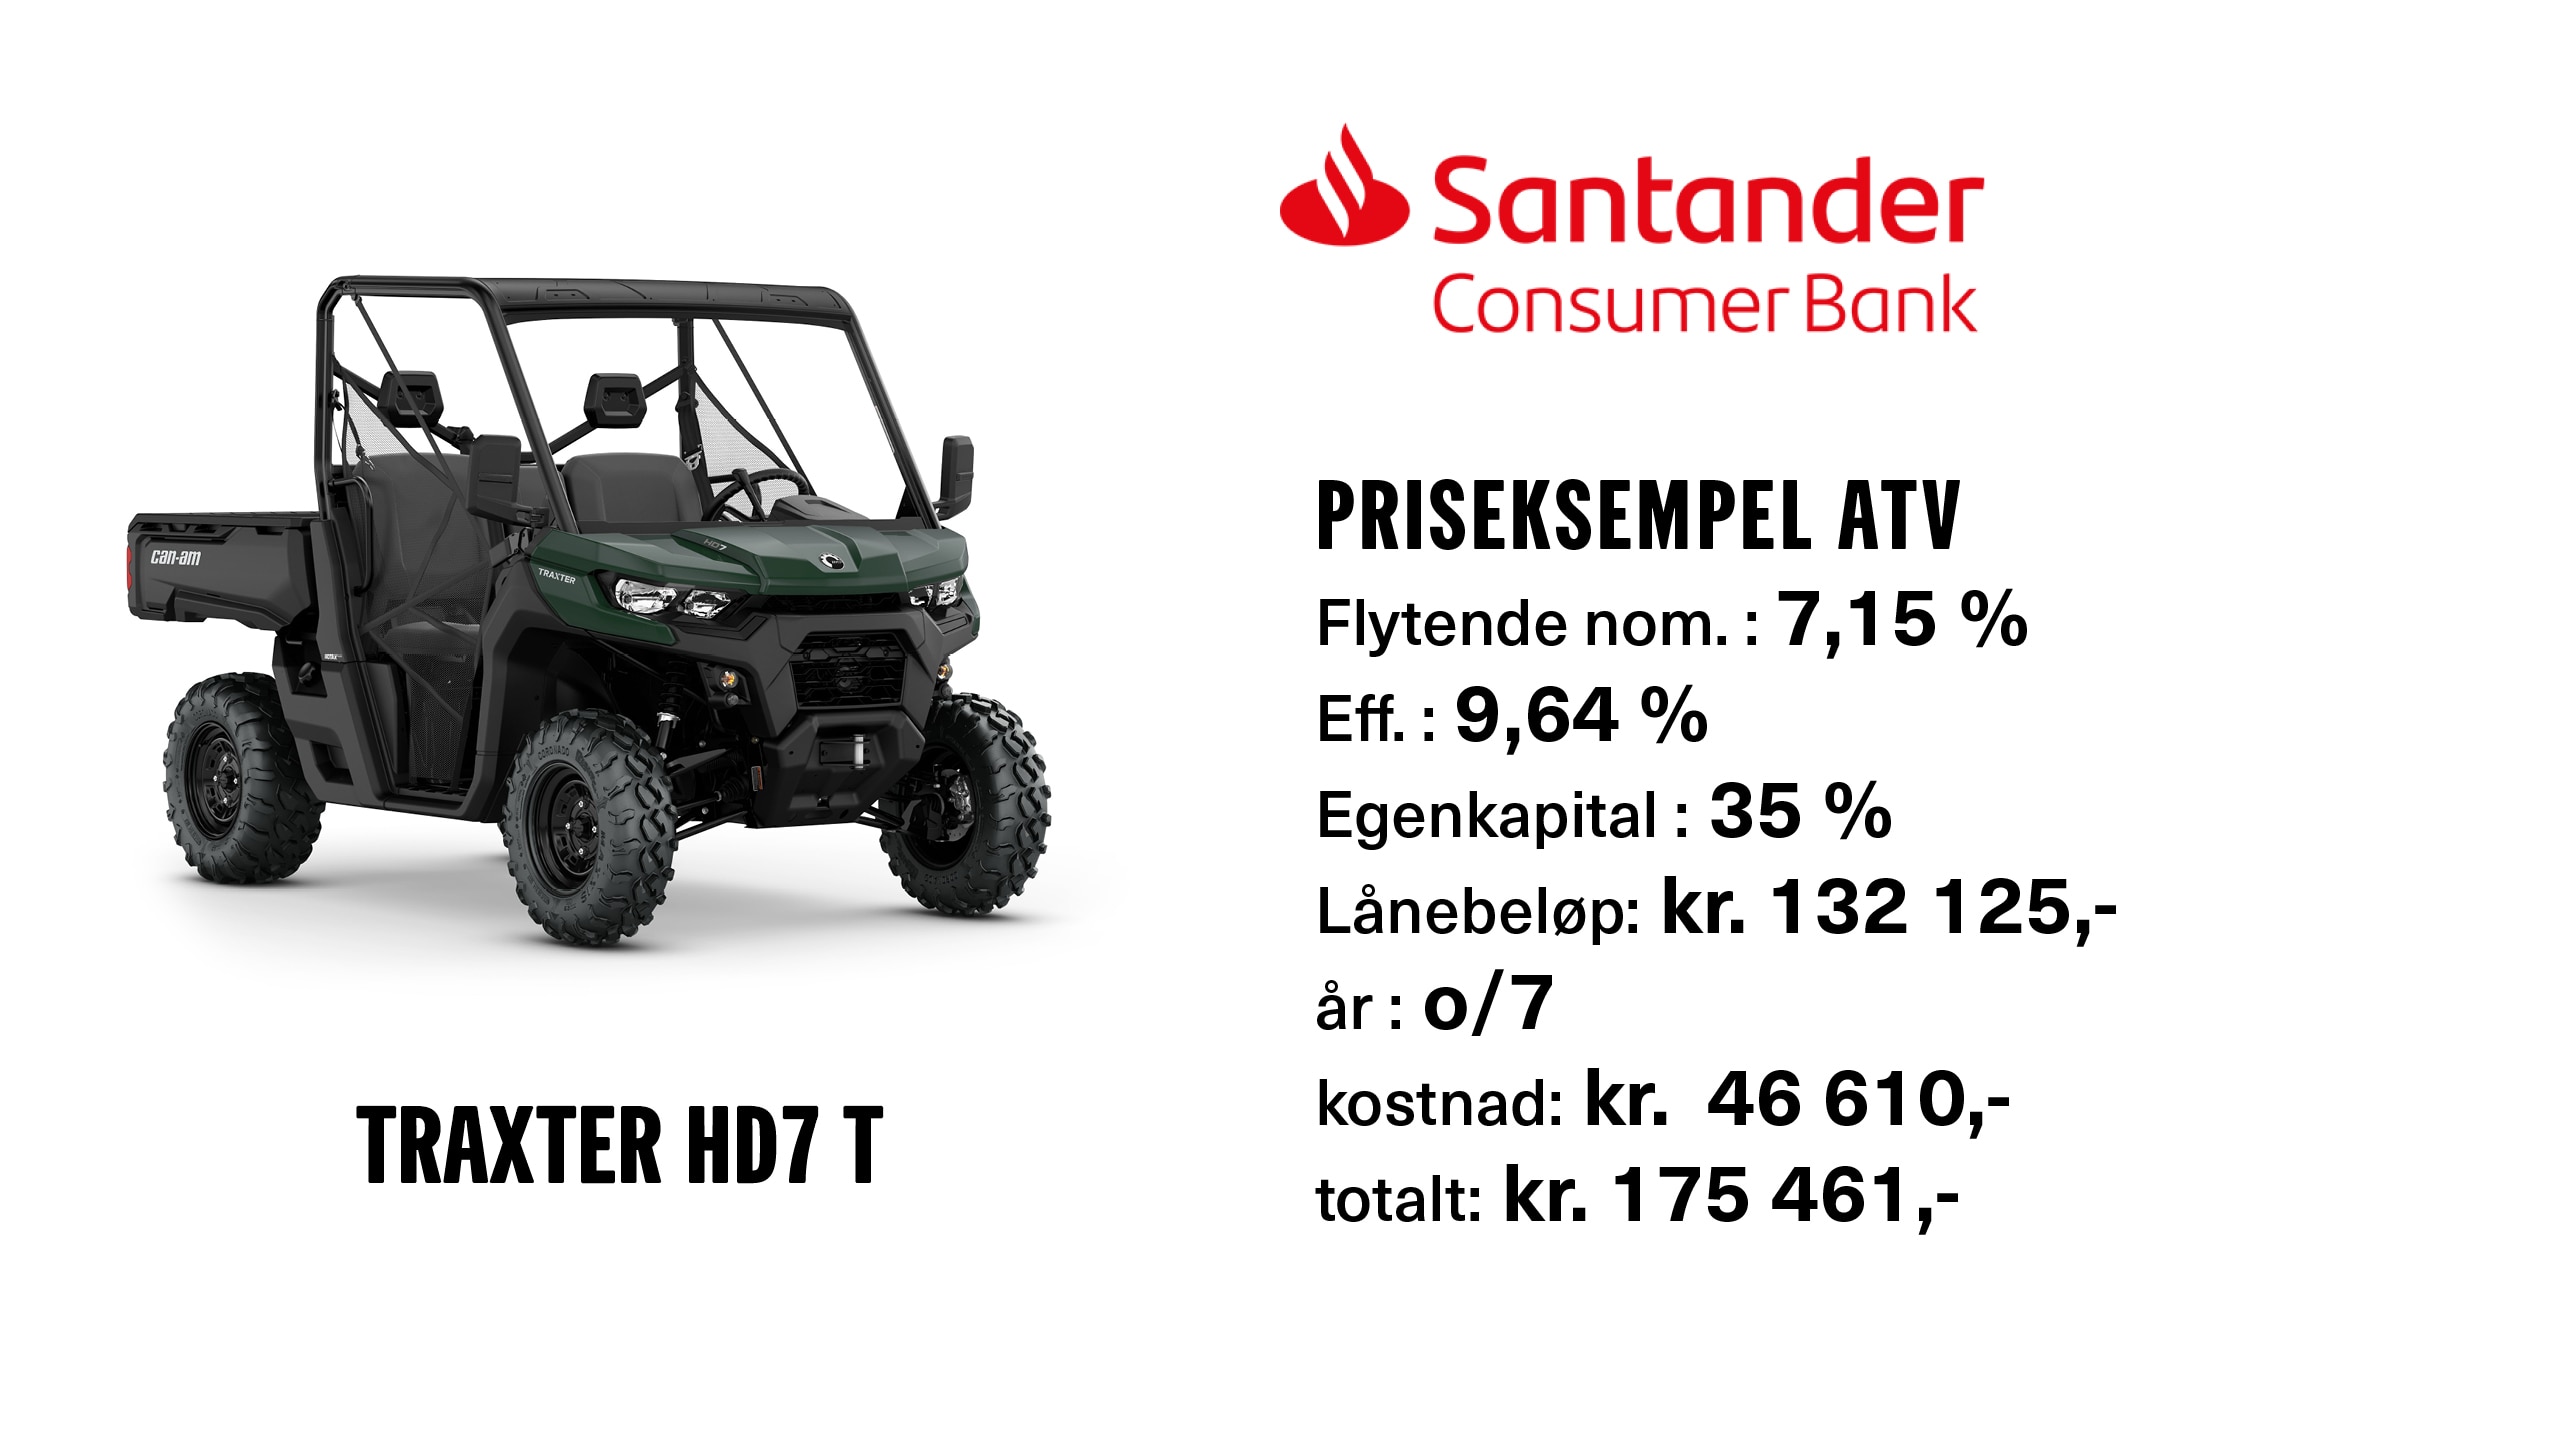 Priseksempel ATV lån fra Santander Consumer Bank: 7,15 %  flytende nom./ 9,64 % eff. 35 % egenkapital, lånebeløp: kr.132 125,- o/7 år, kostnad: kr. 46 610,-  totalt: kr. 175 461,-